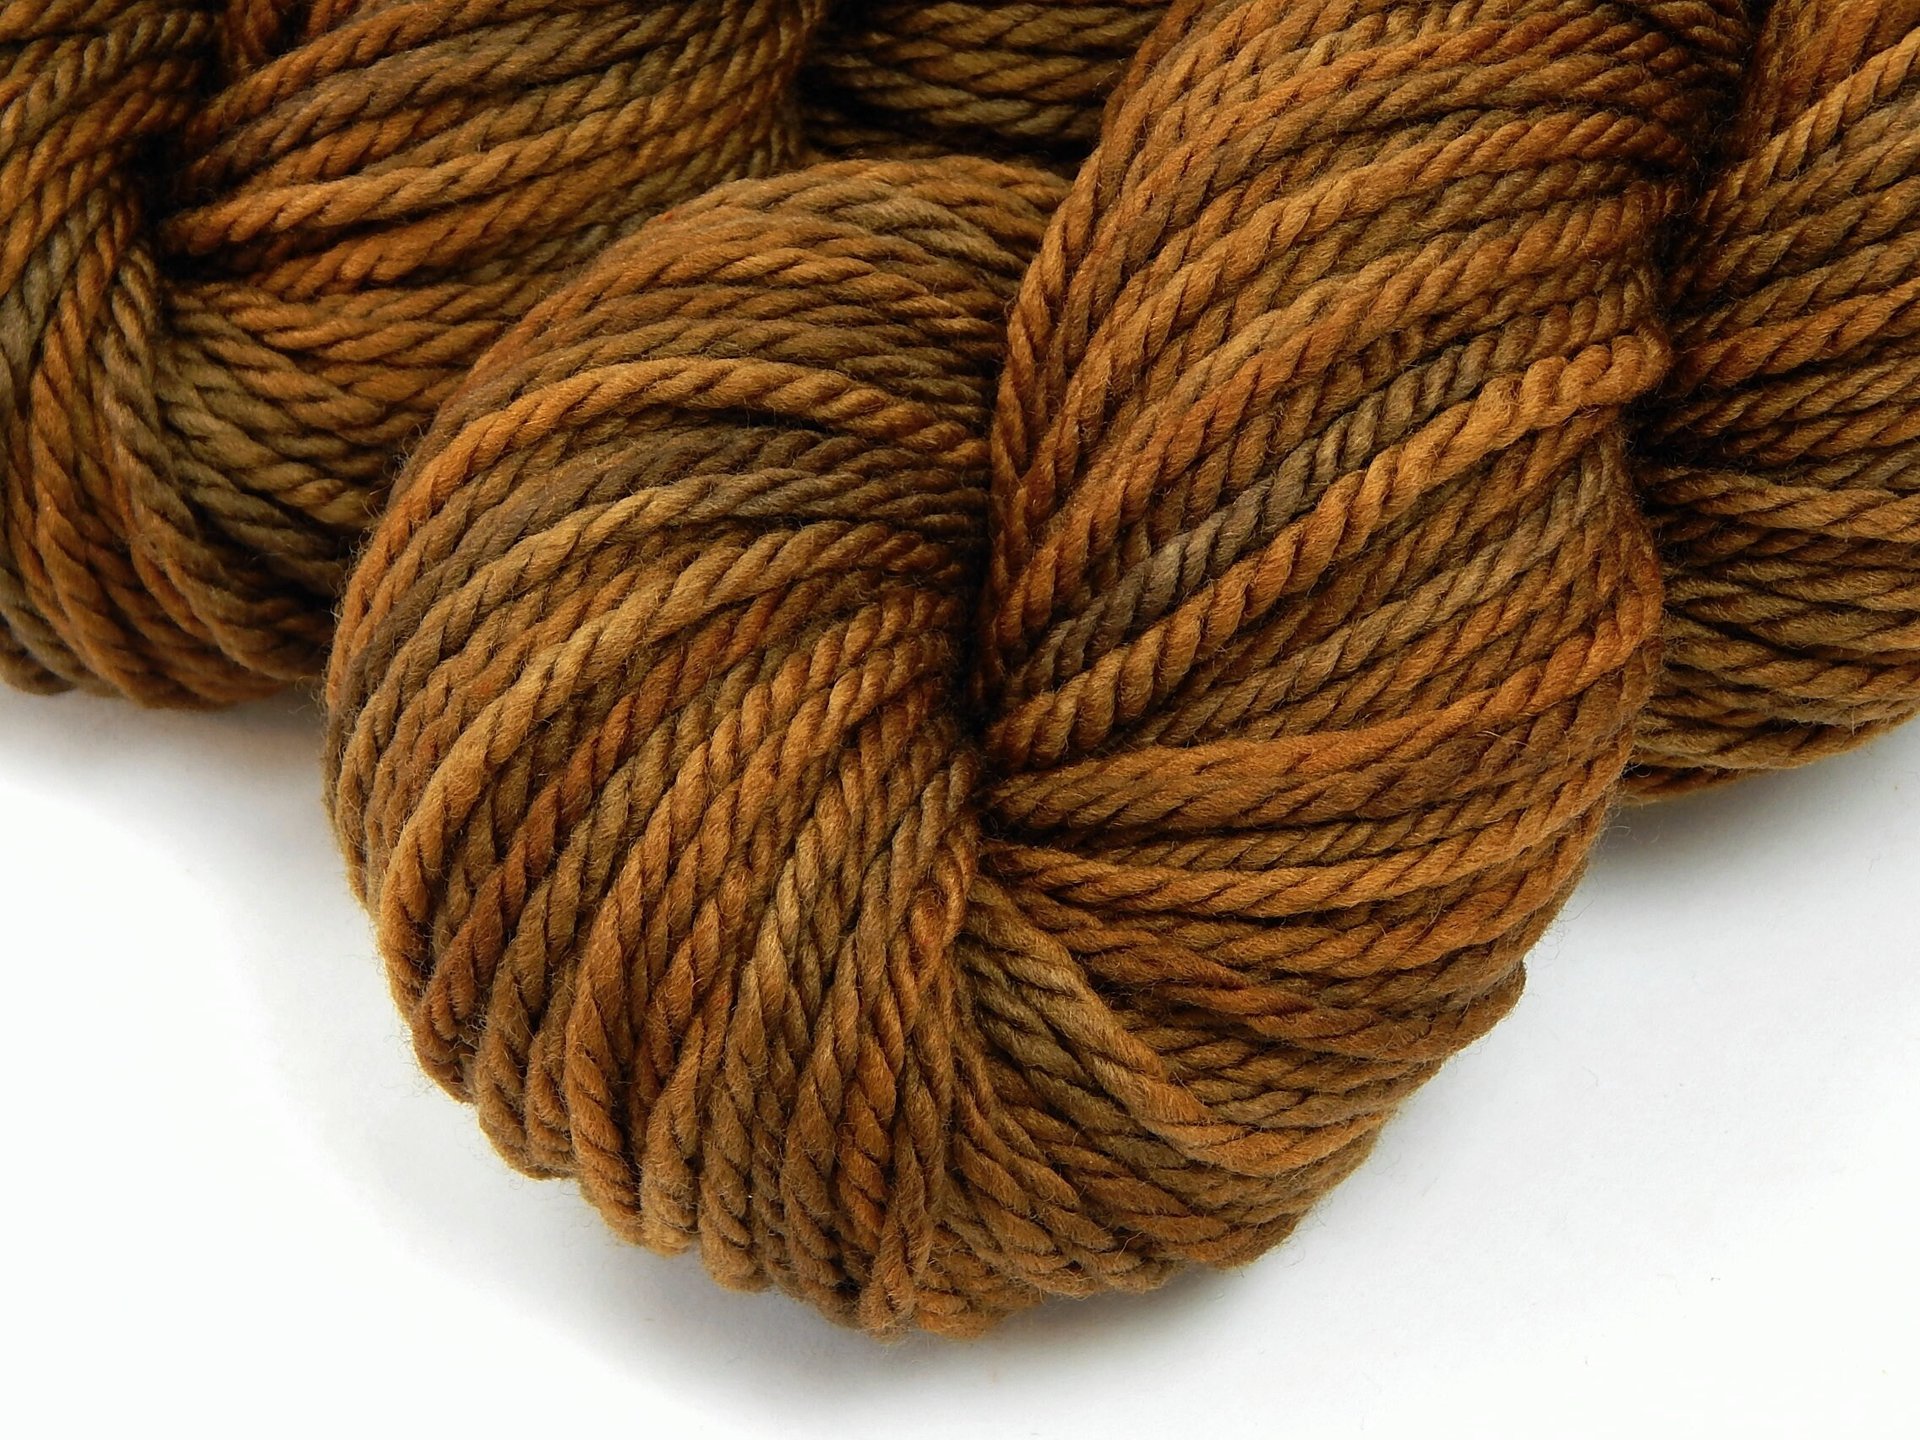 Hand Dyed Yarn, Bulky 100% Superwash Merino Wool - Hazelnut - Indie Dyer Thick Warm Brown Hand Dyed Yarn, Soft Tonal Chunky Knitting Yarn